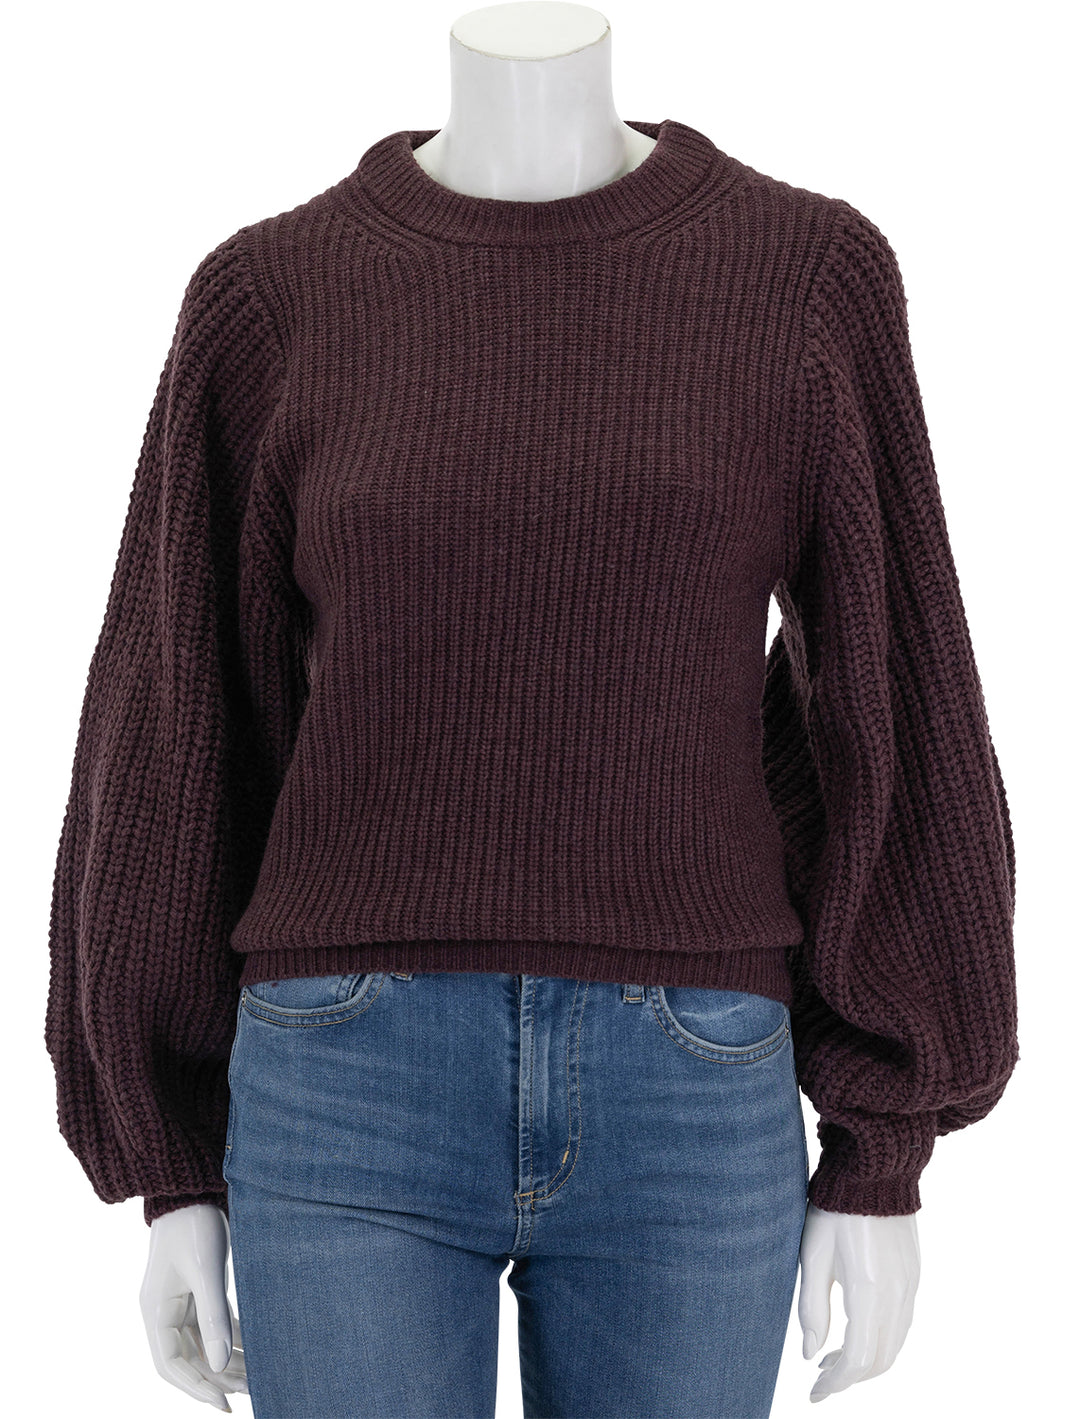 Front view of STAUD's aura sweater in merlot.